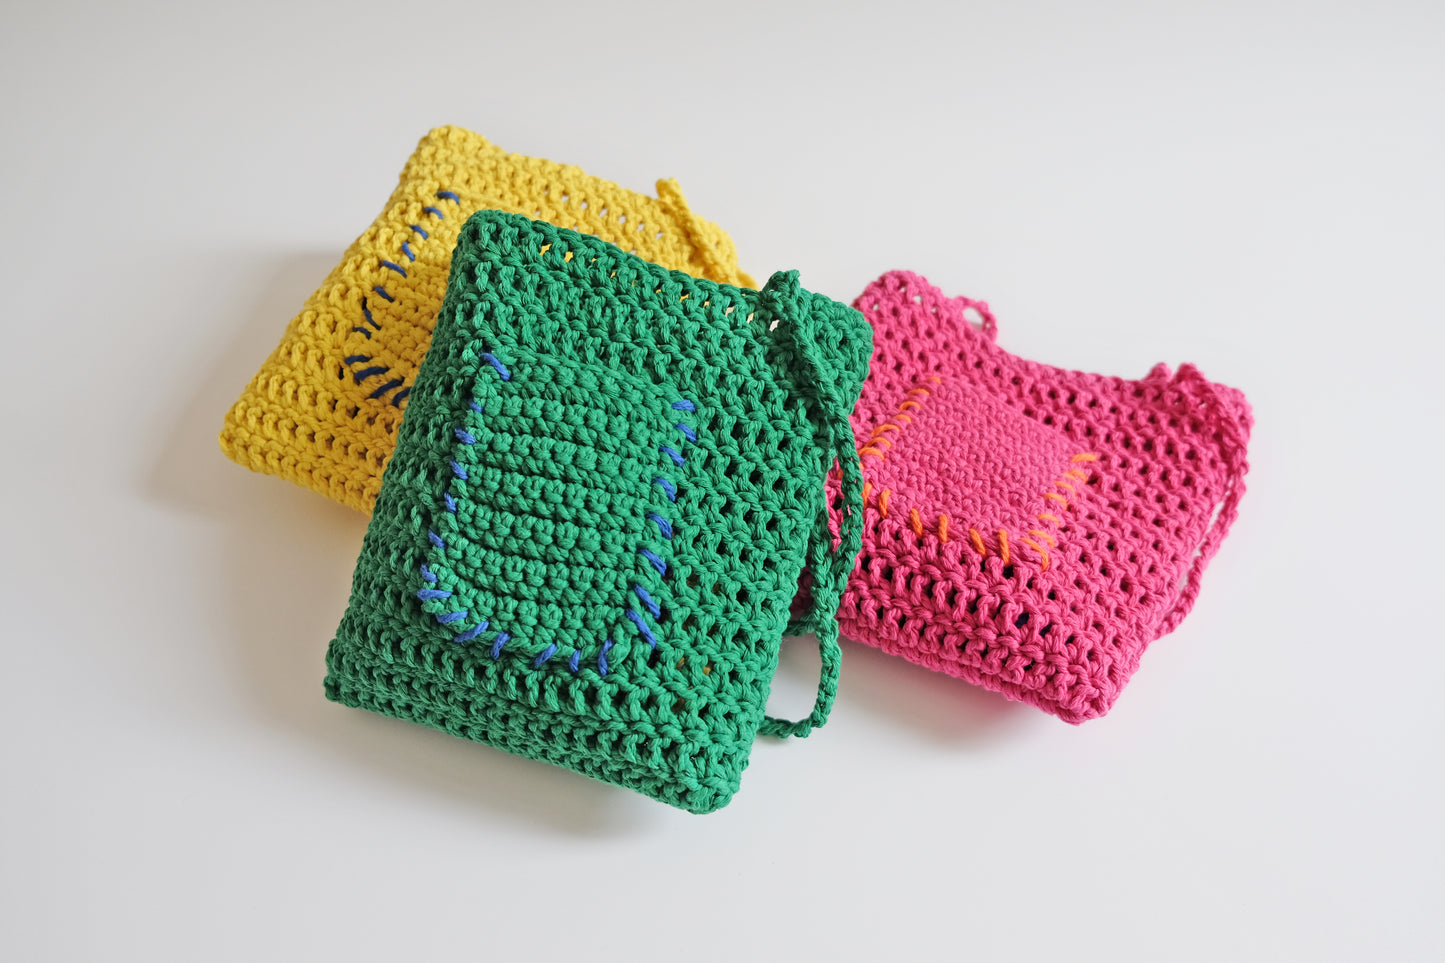 Tiff Crochet Bag Yellow